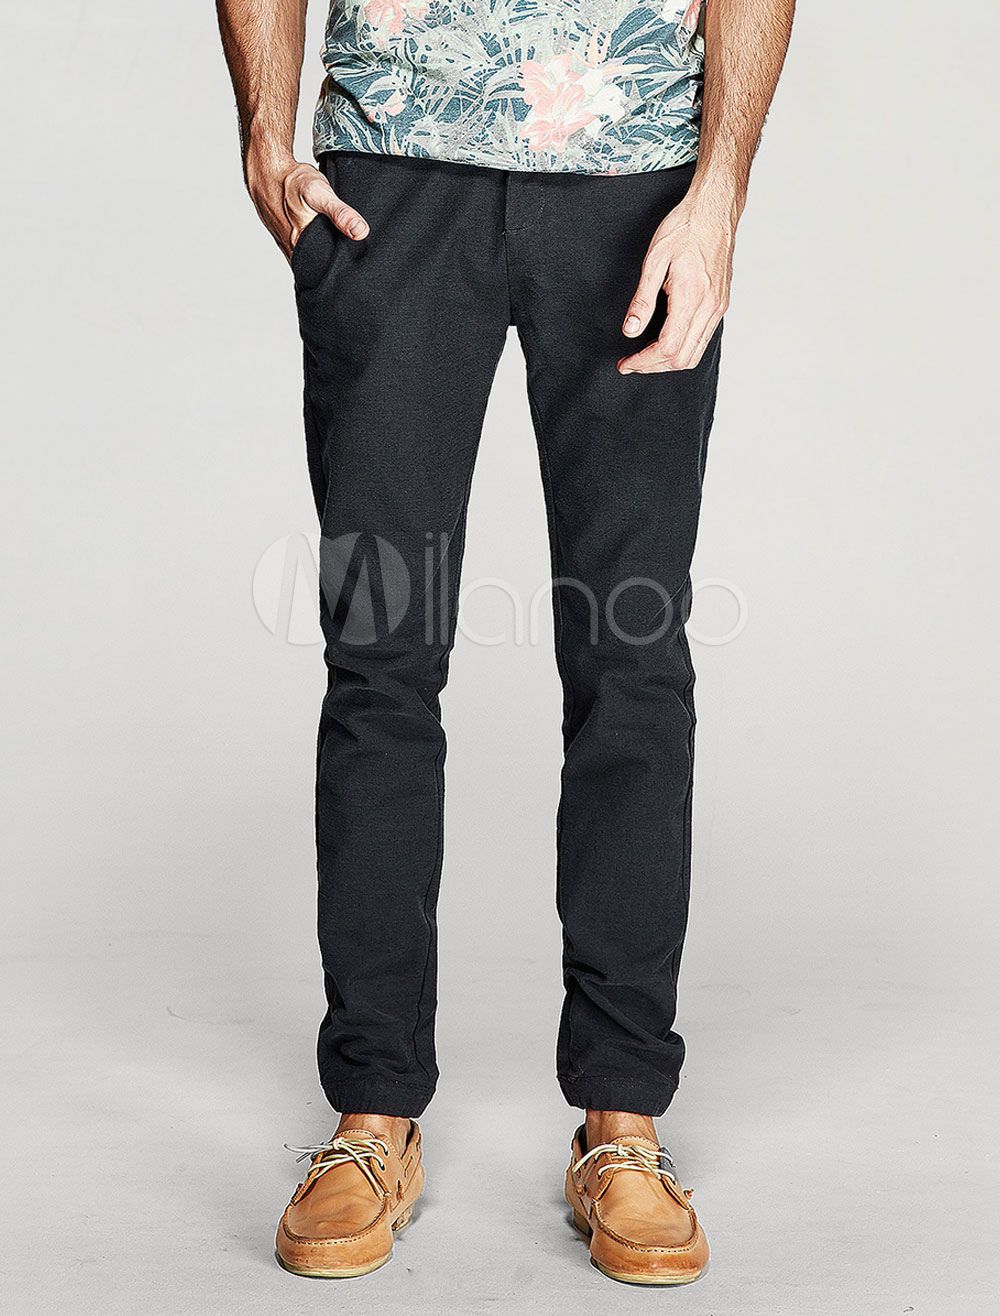 Men's Black Pants Cotton Slim Pants | Milanoo